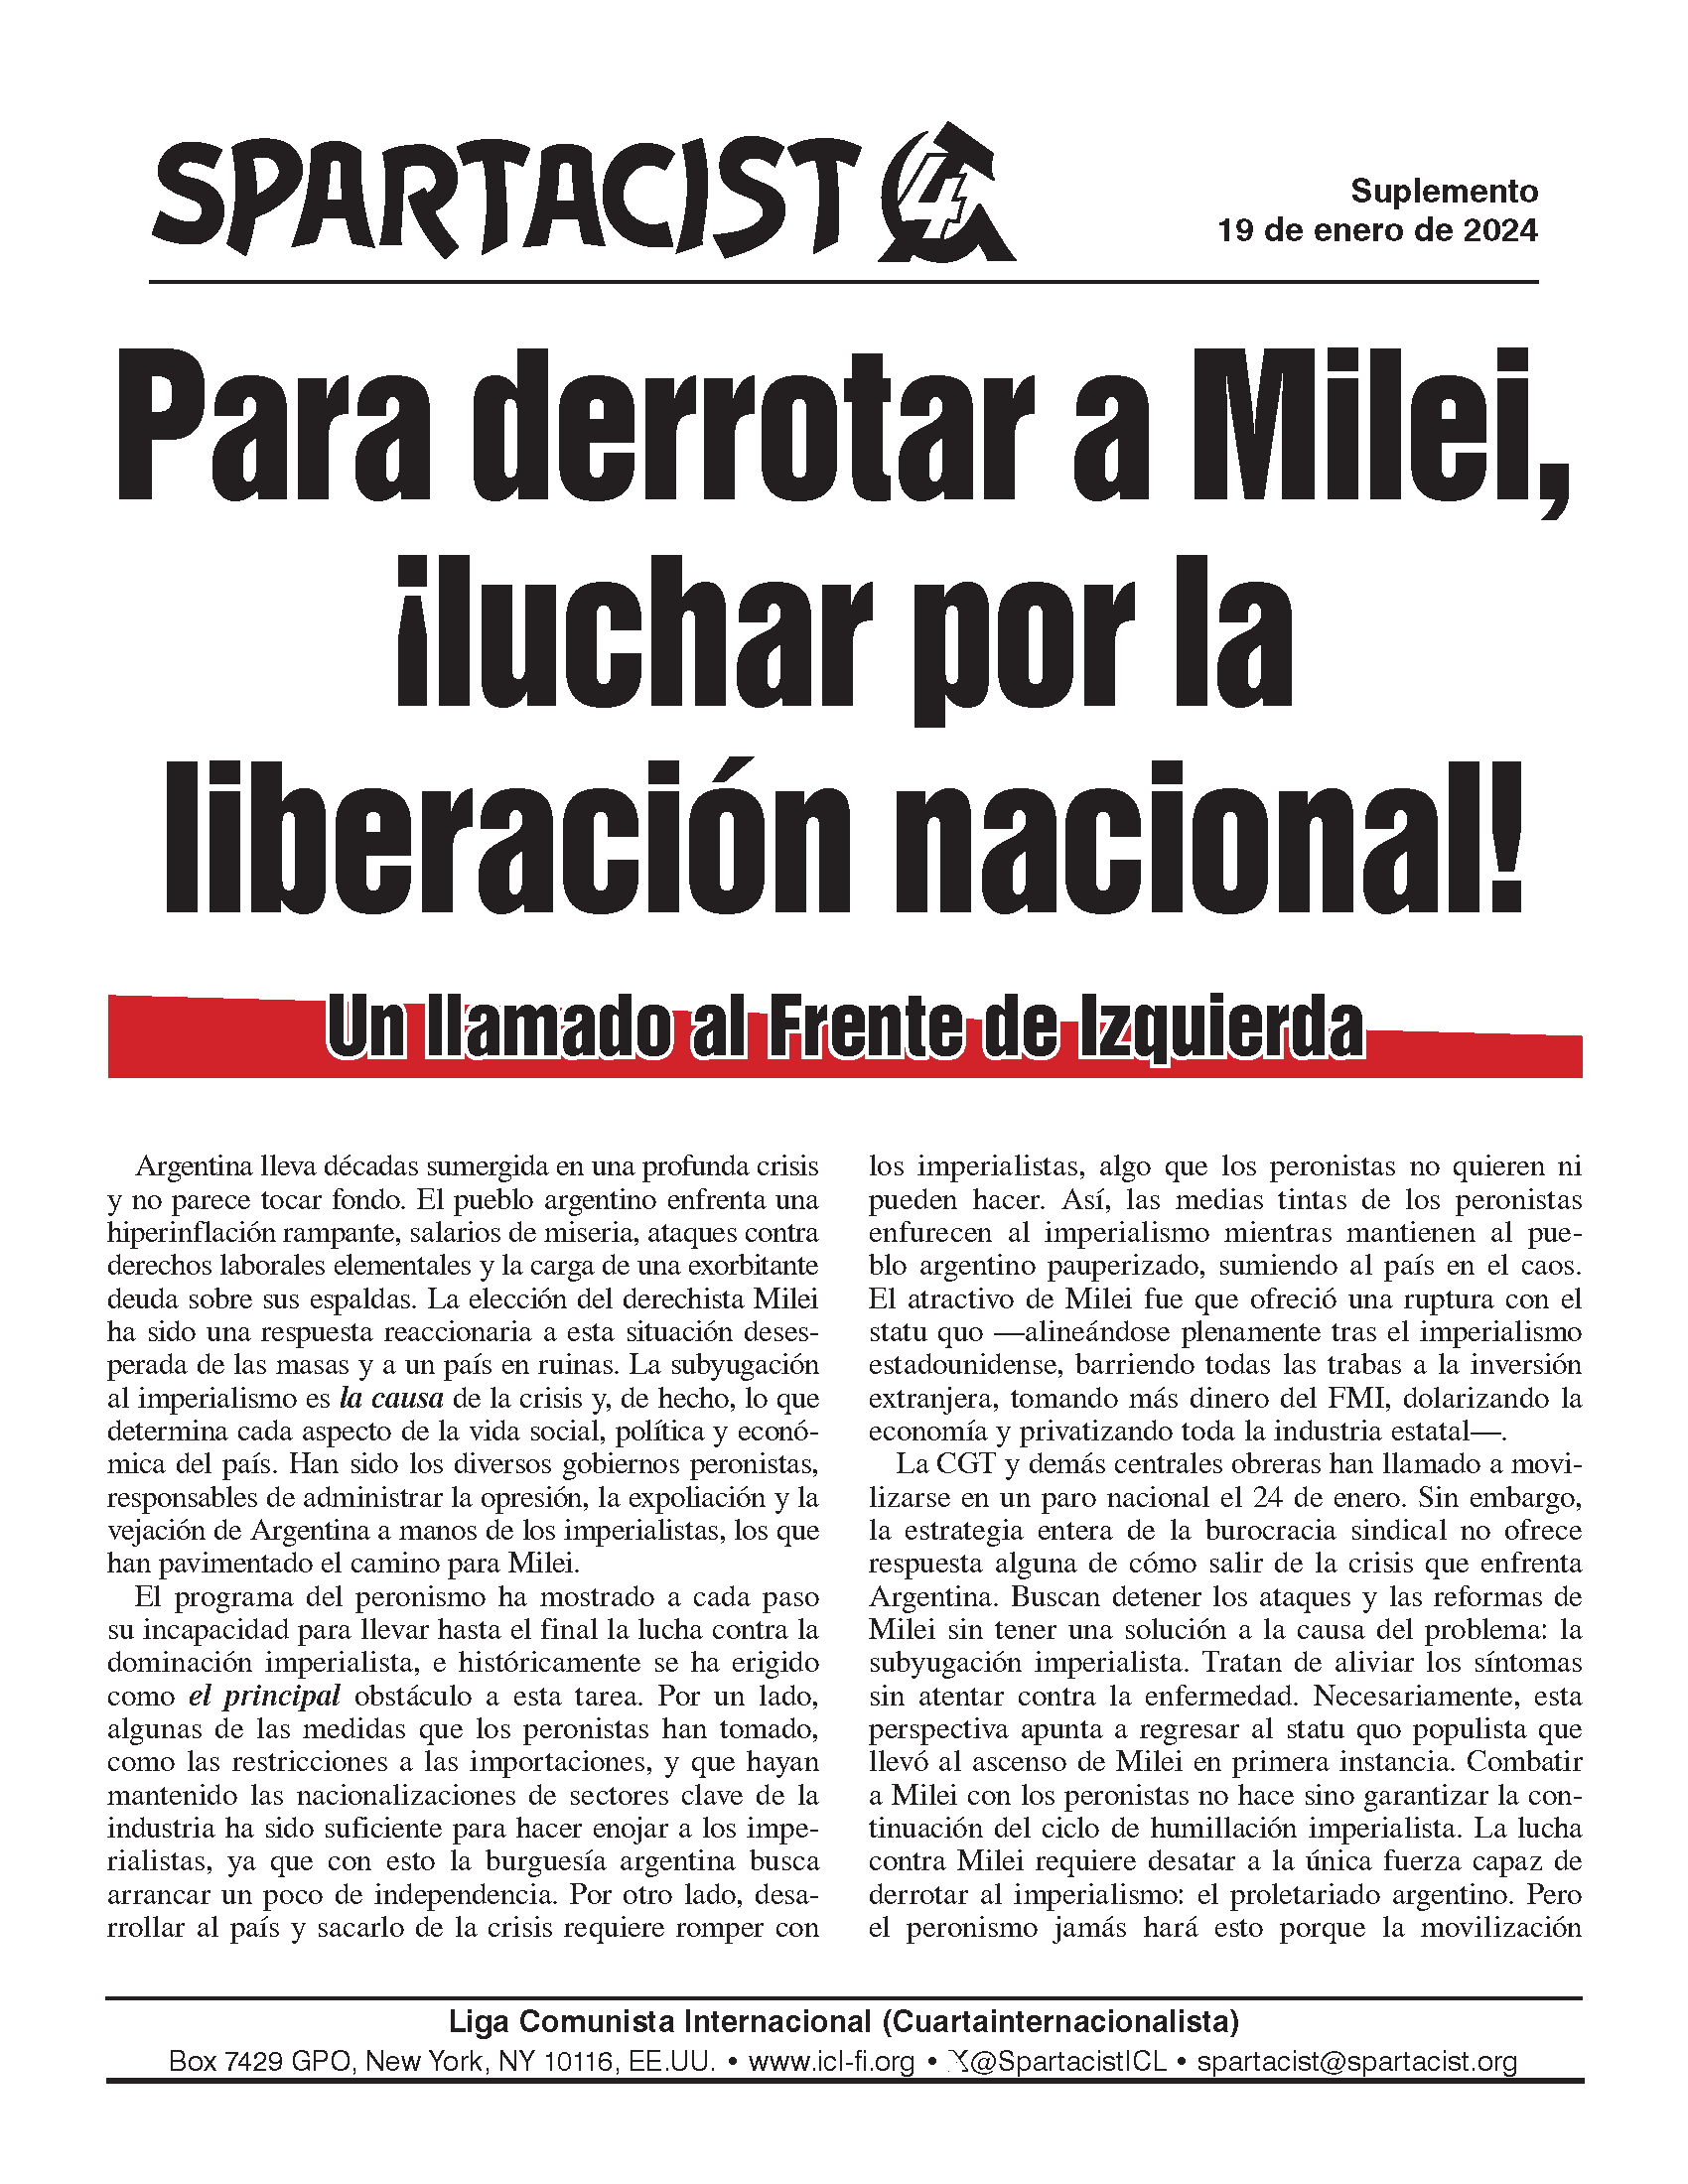 Spartacist (edición en español) supplement  |  19 January 2024